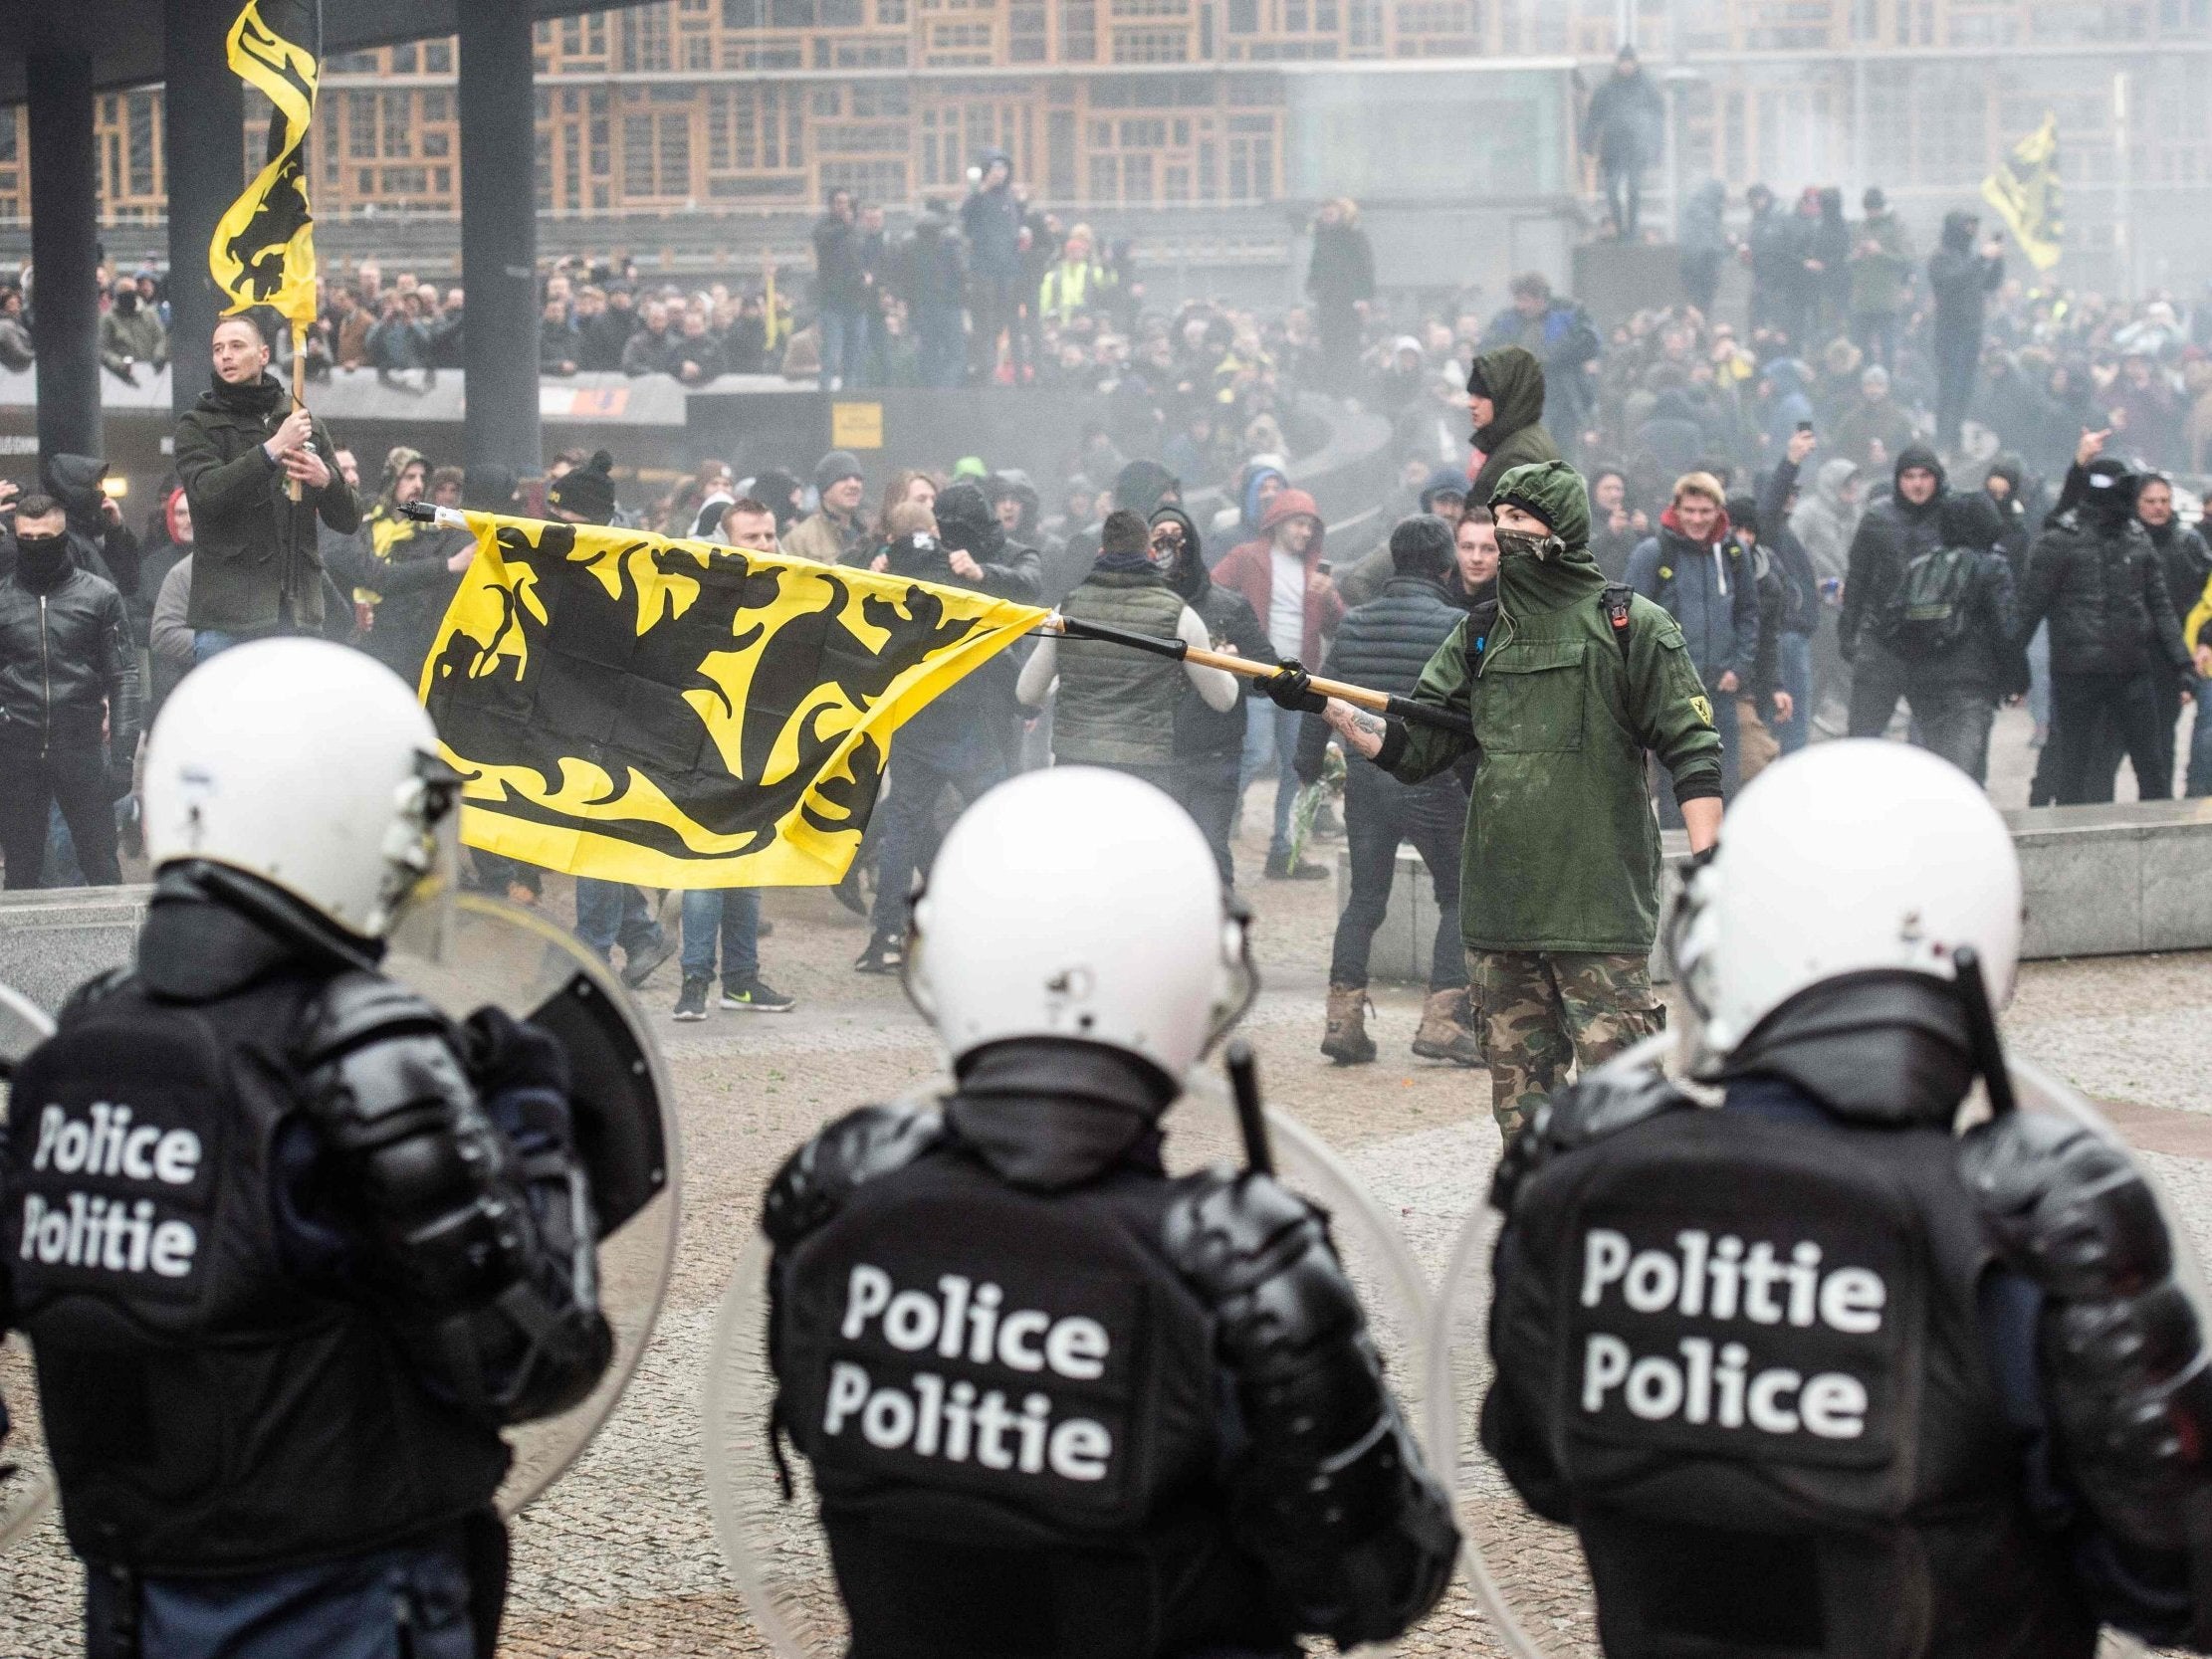 Demonstrators waved Flemish flag at rally in Belgian capital